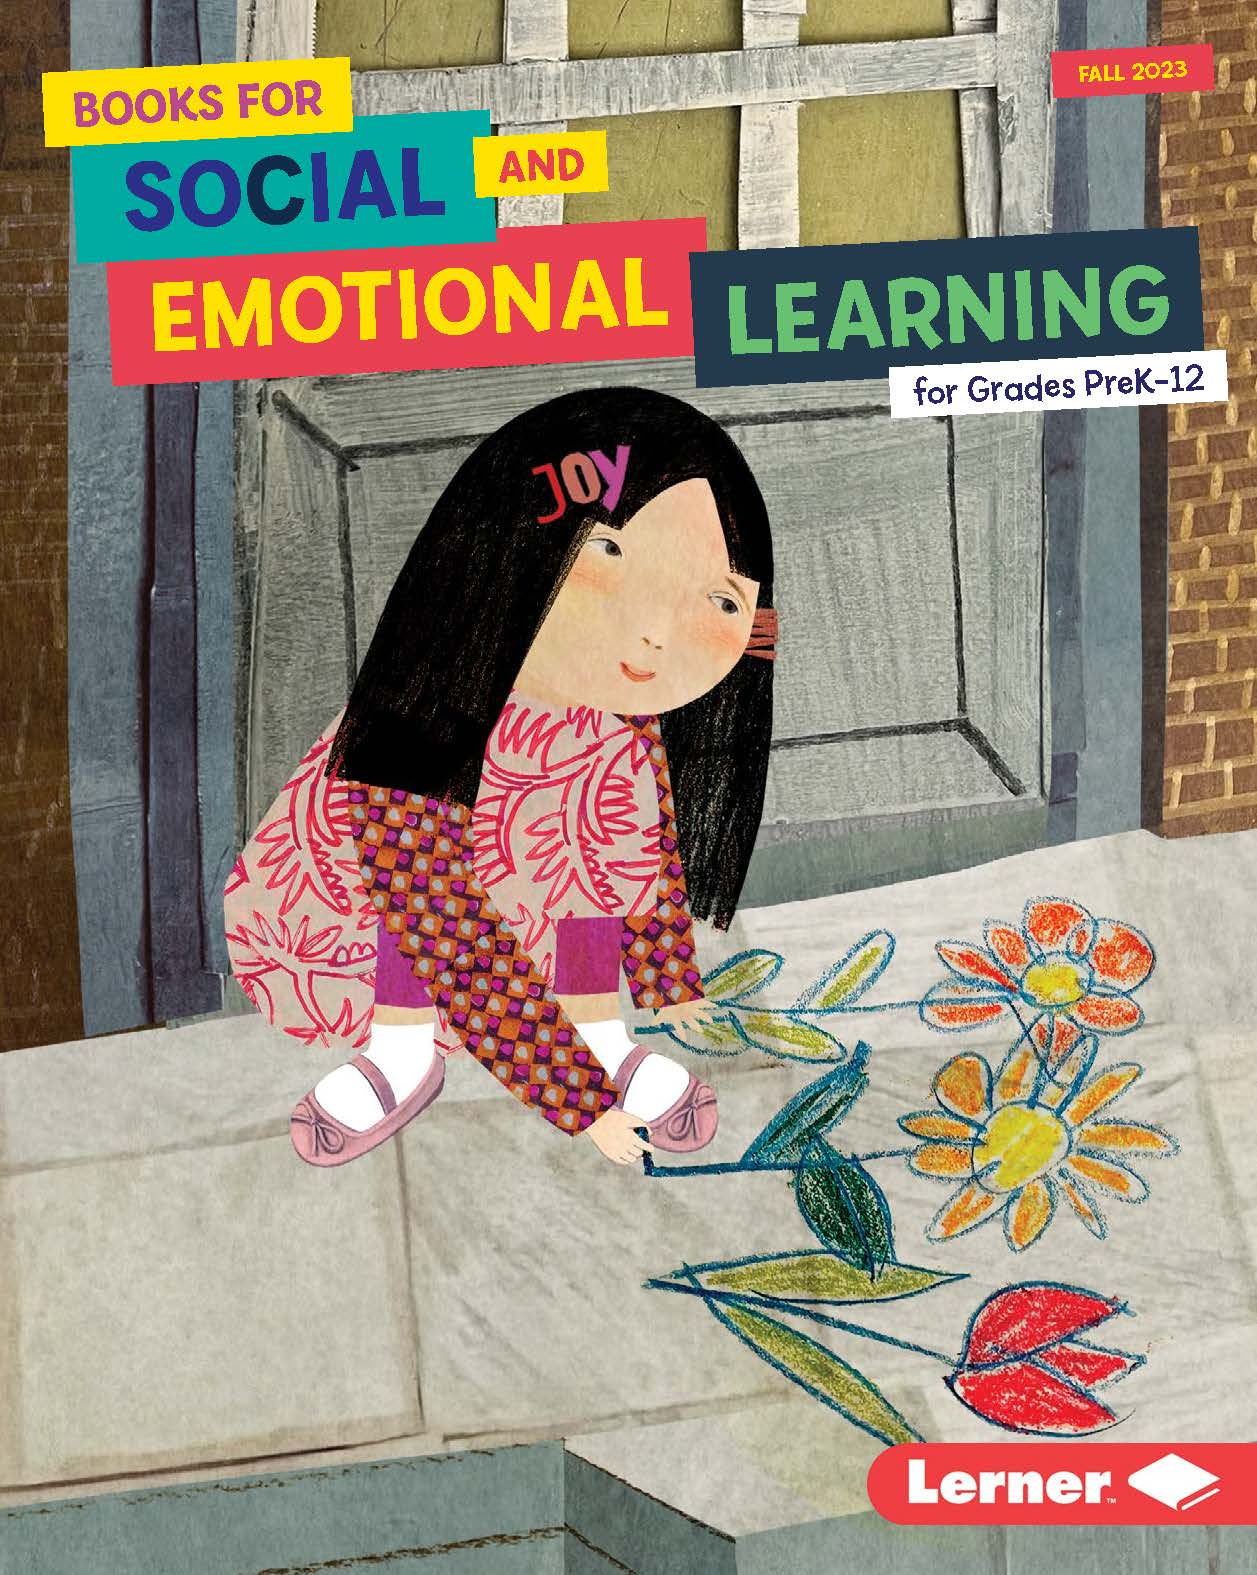 Fall 2023 Books for Social Emotional Learning